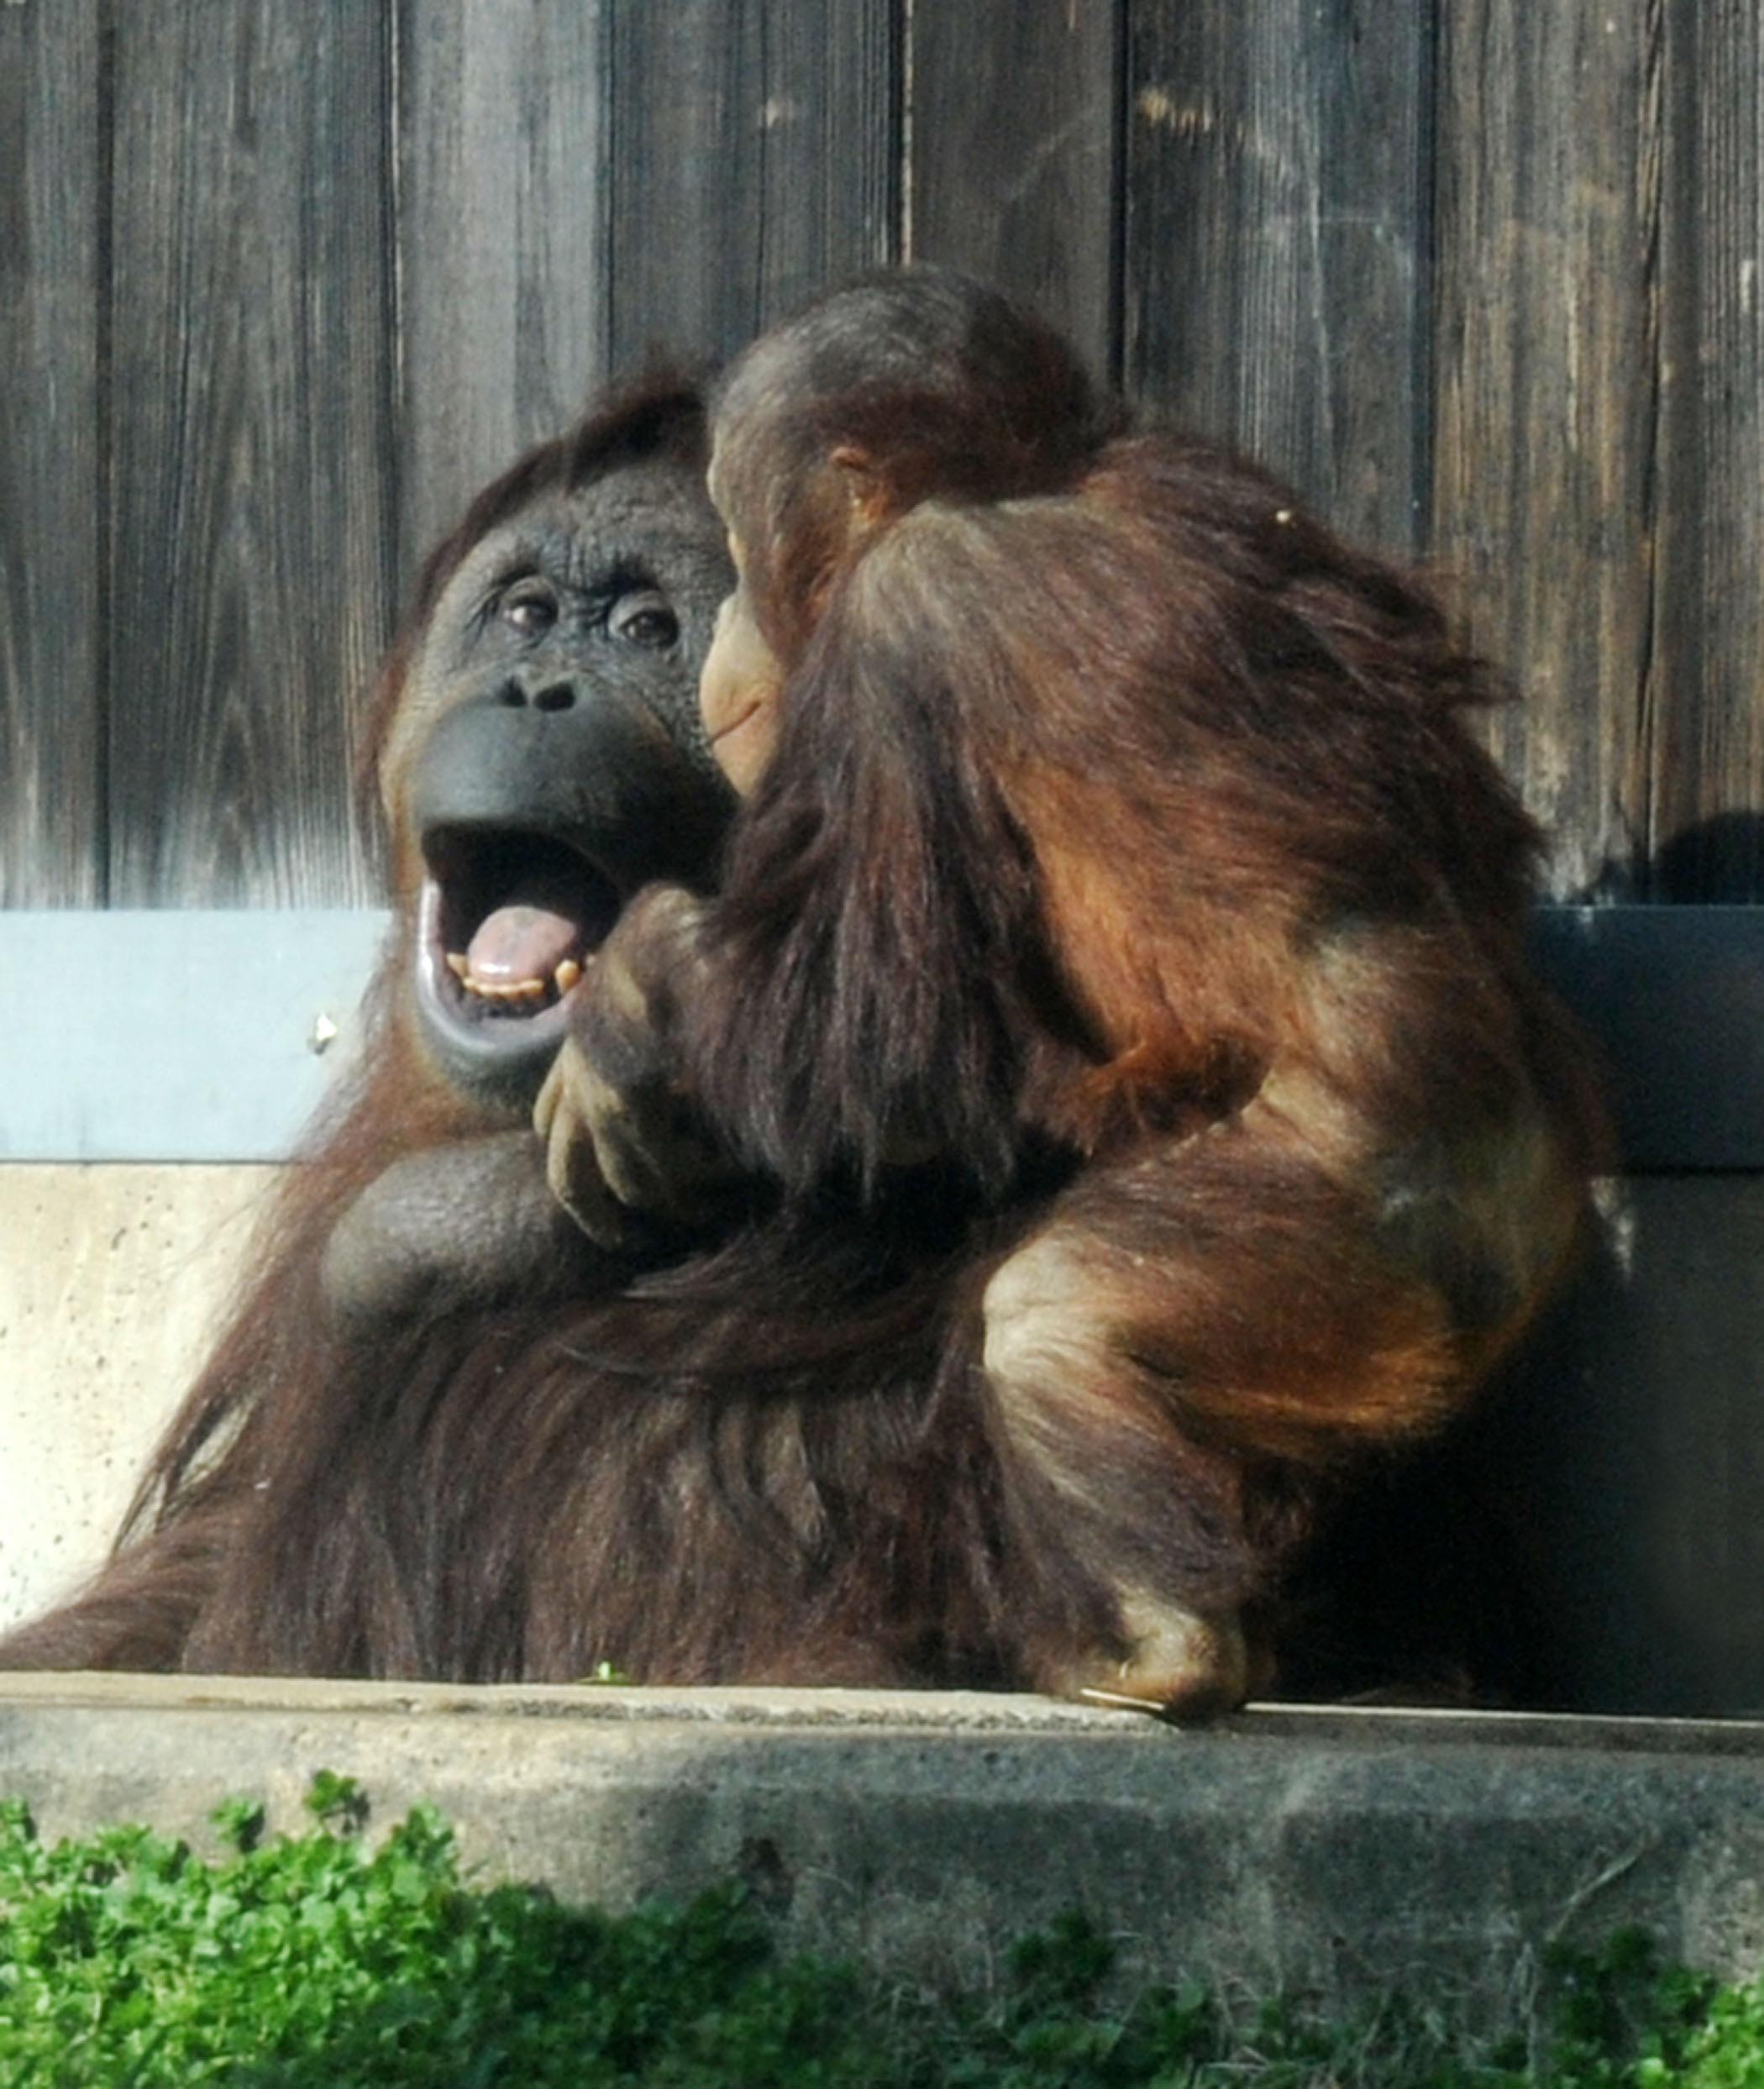 Adorable Orangutans at The Smitsonians National Zoo in Washington DC.